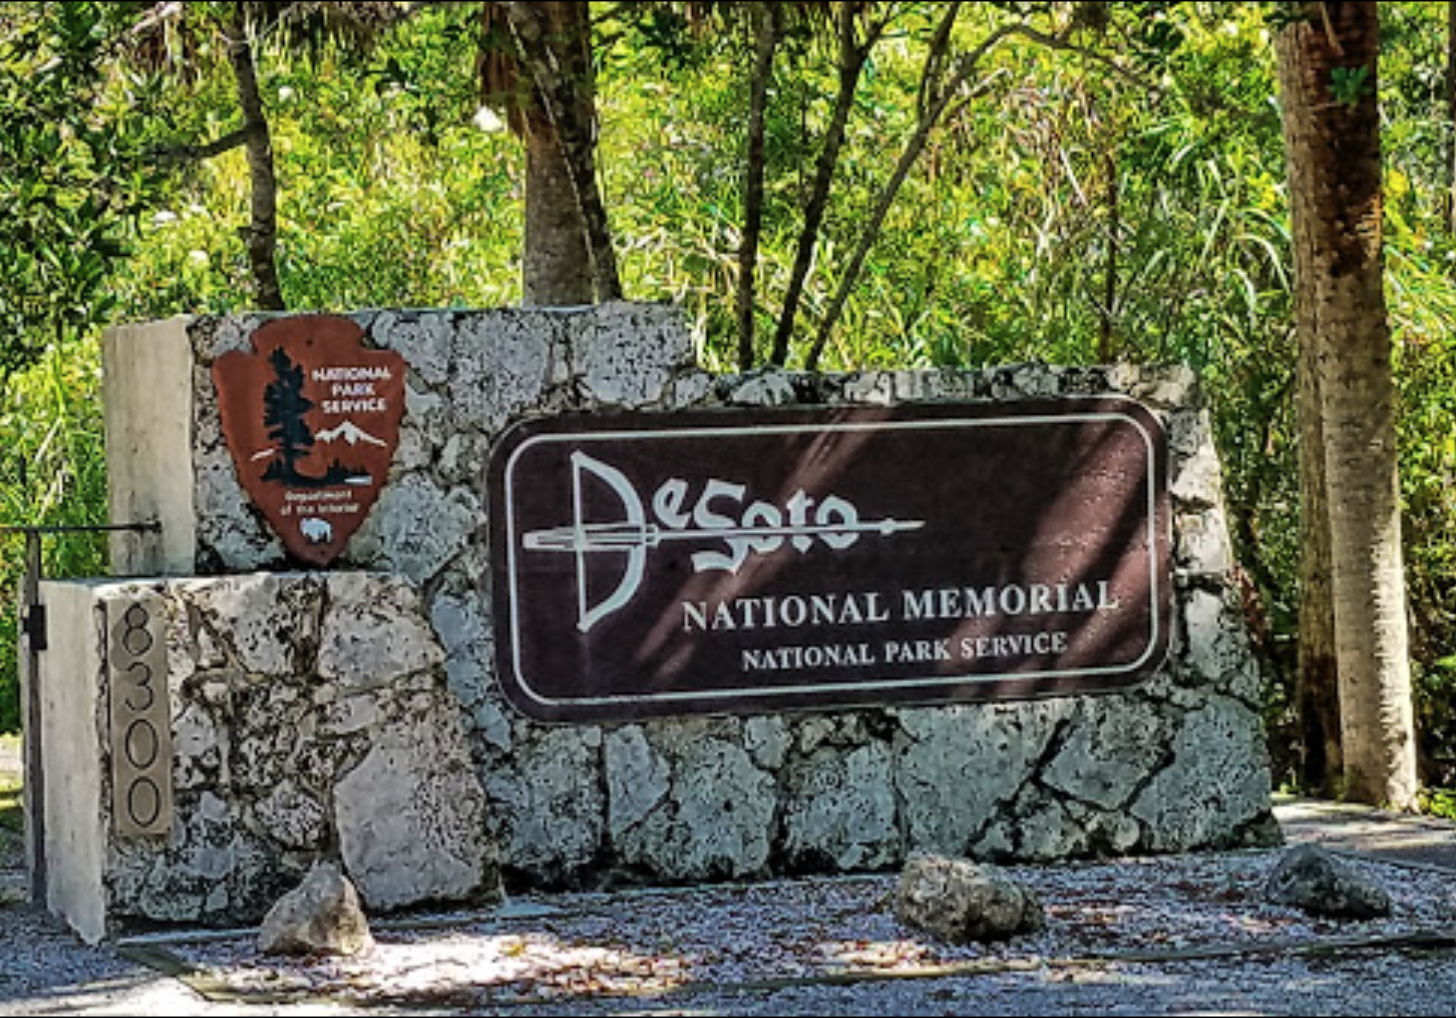 Visit Bradenton’s Desoto National Memorial Park